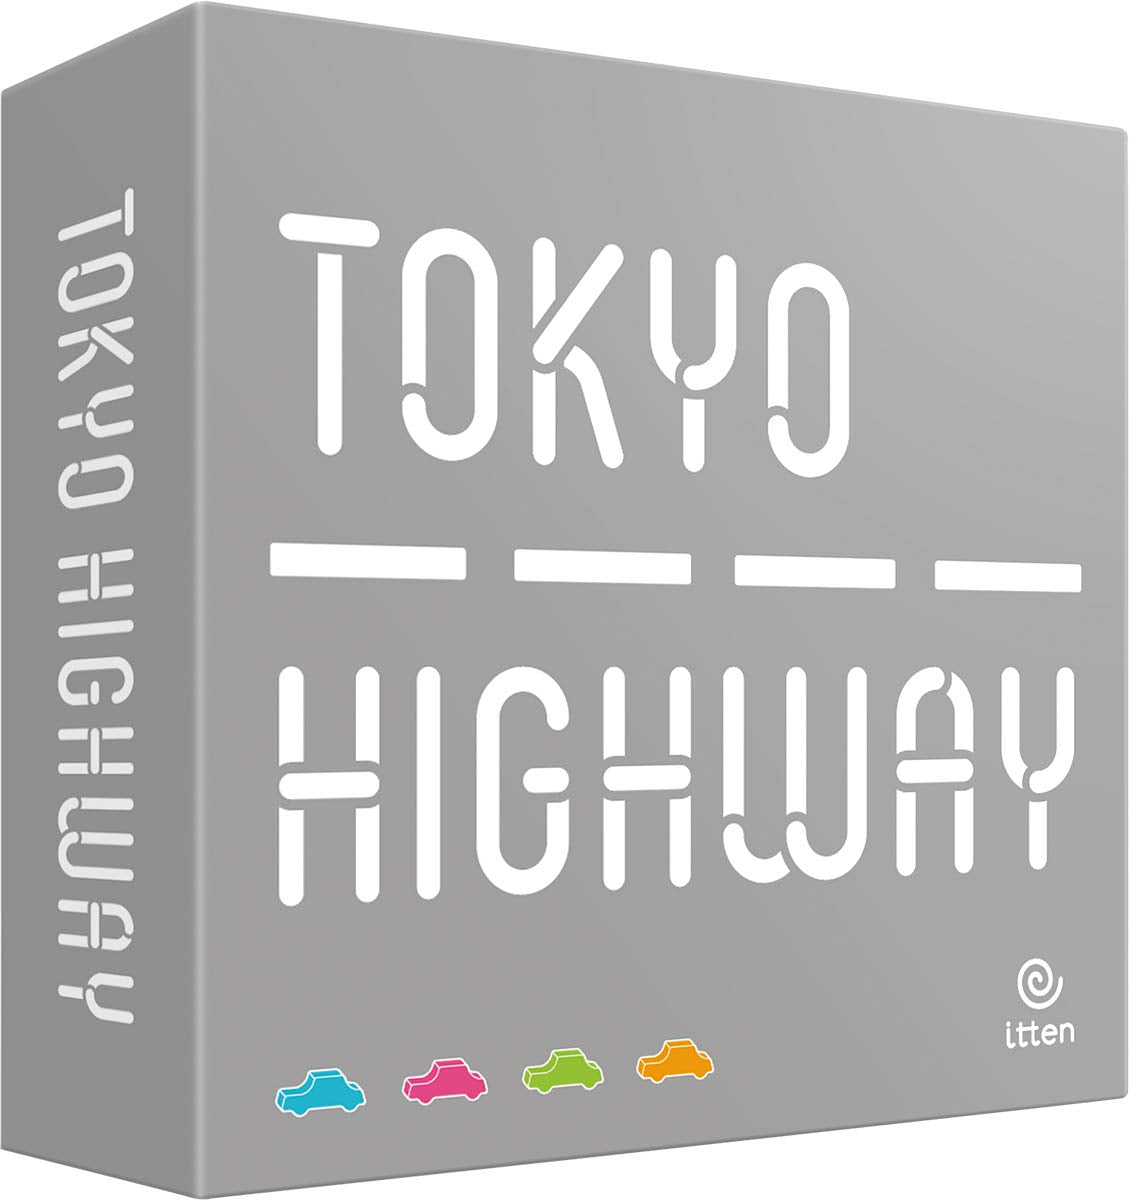 Tokyo Highway - Gamescape